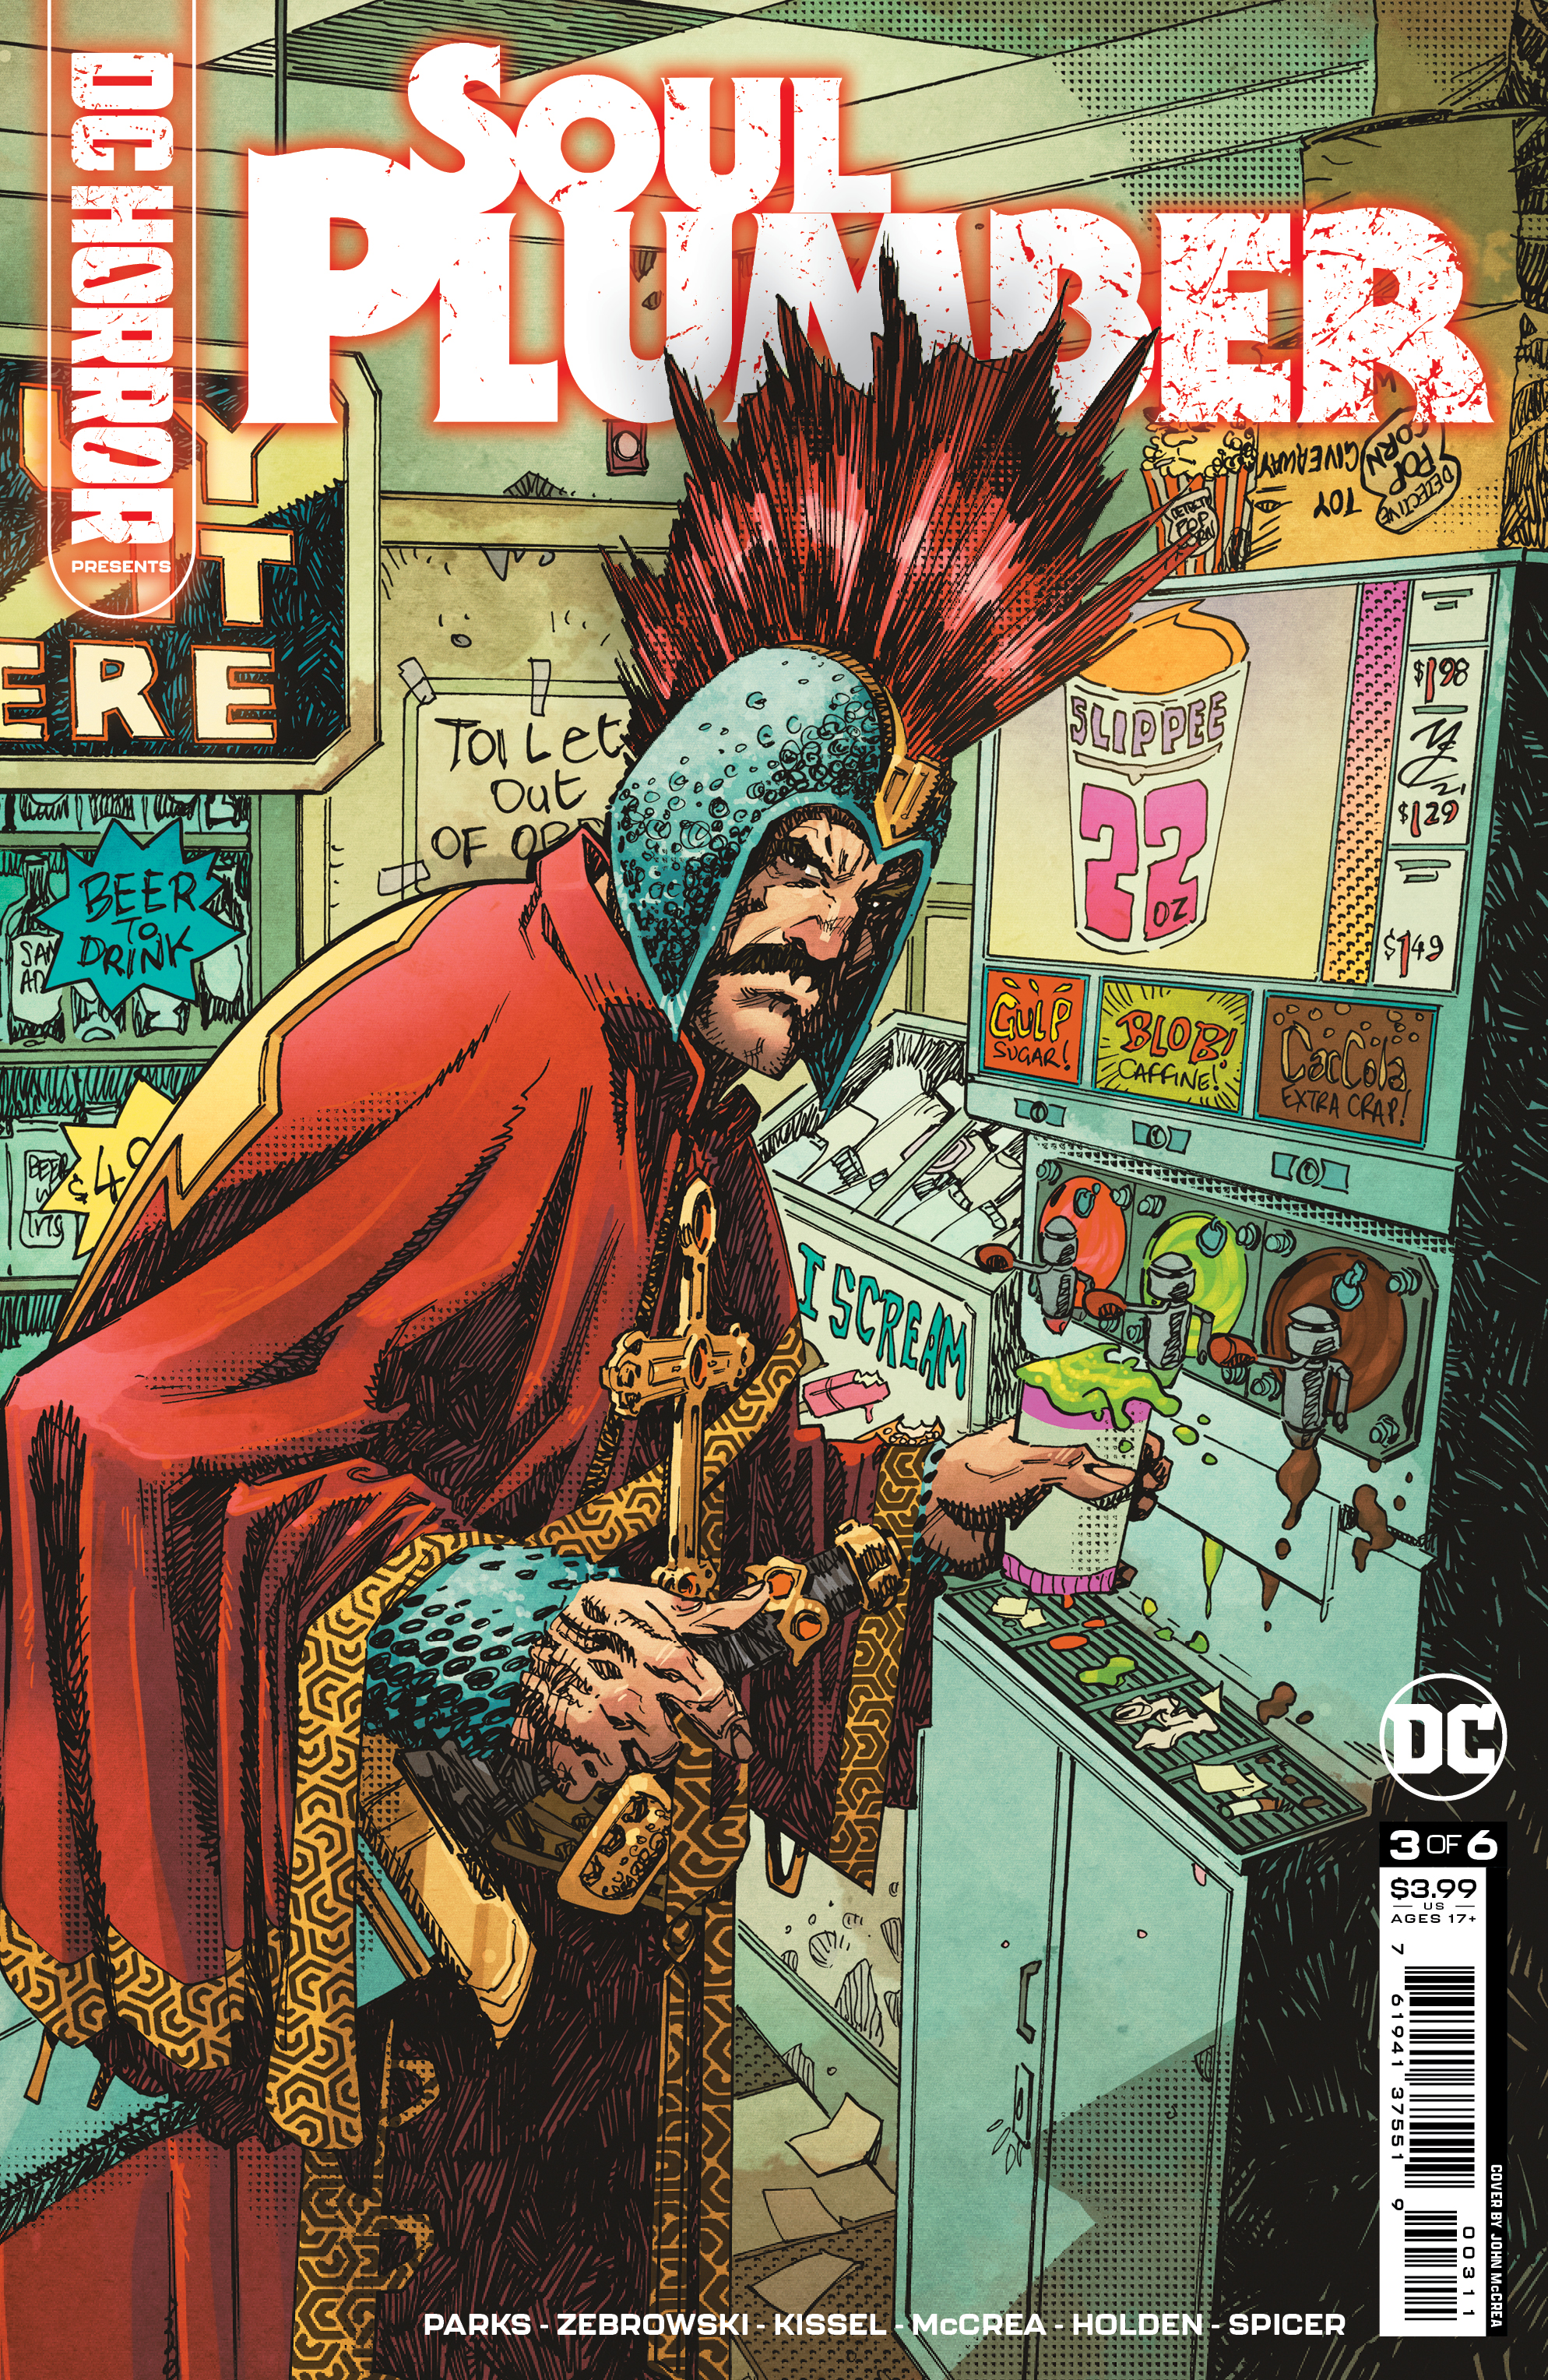 DC Horror Presents Soul Plumber #3 Cover A John McCrea (Mature) (Of 6)